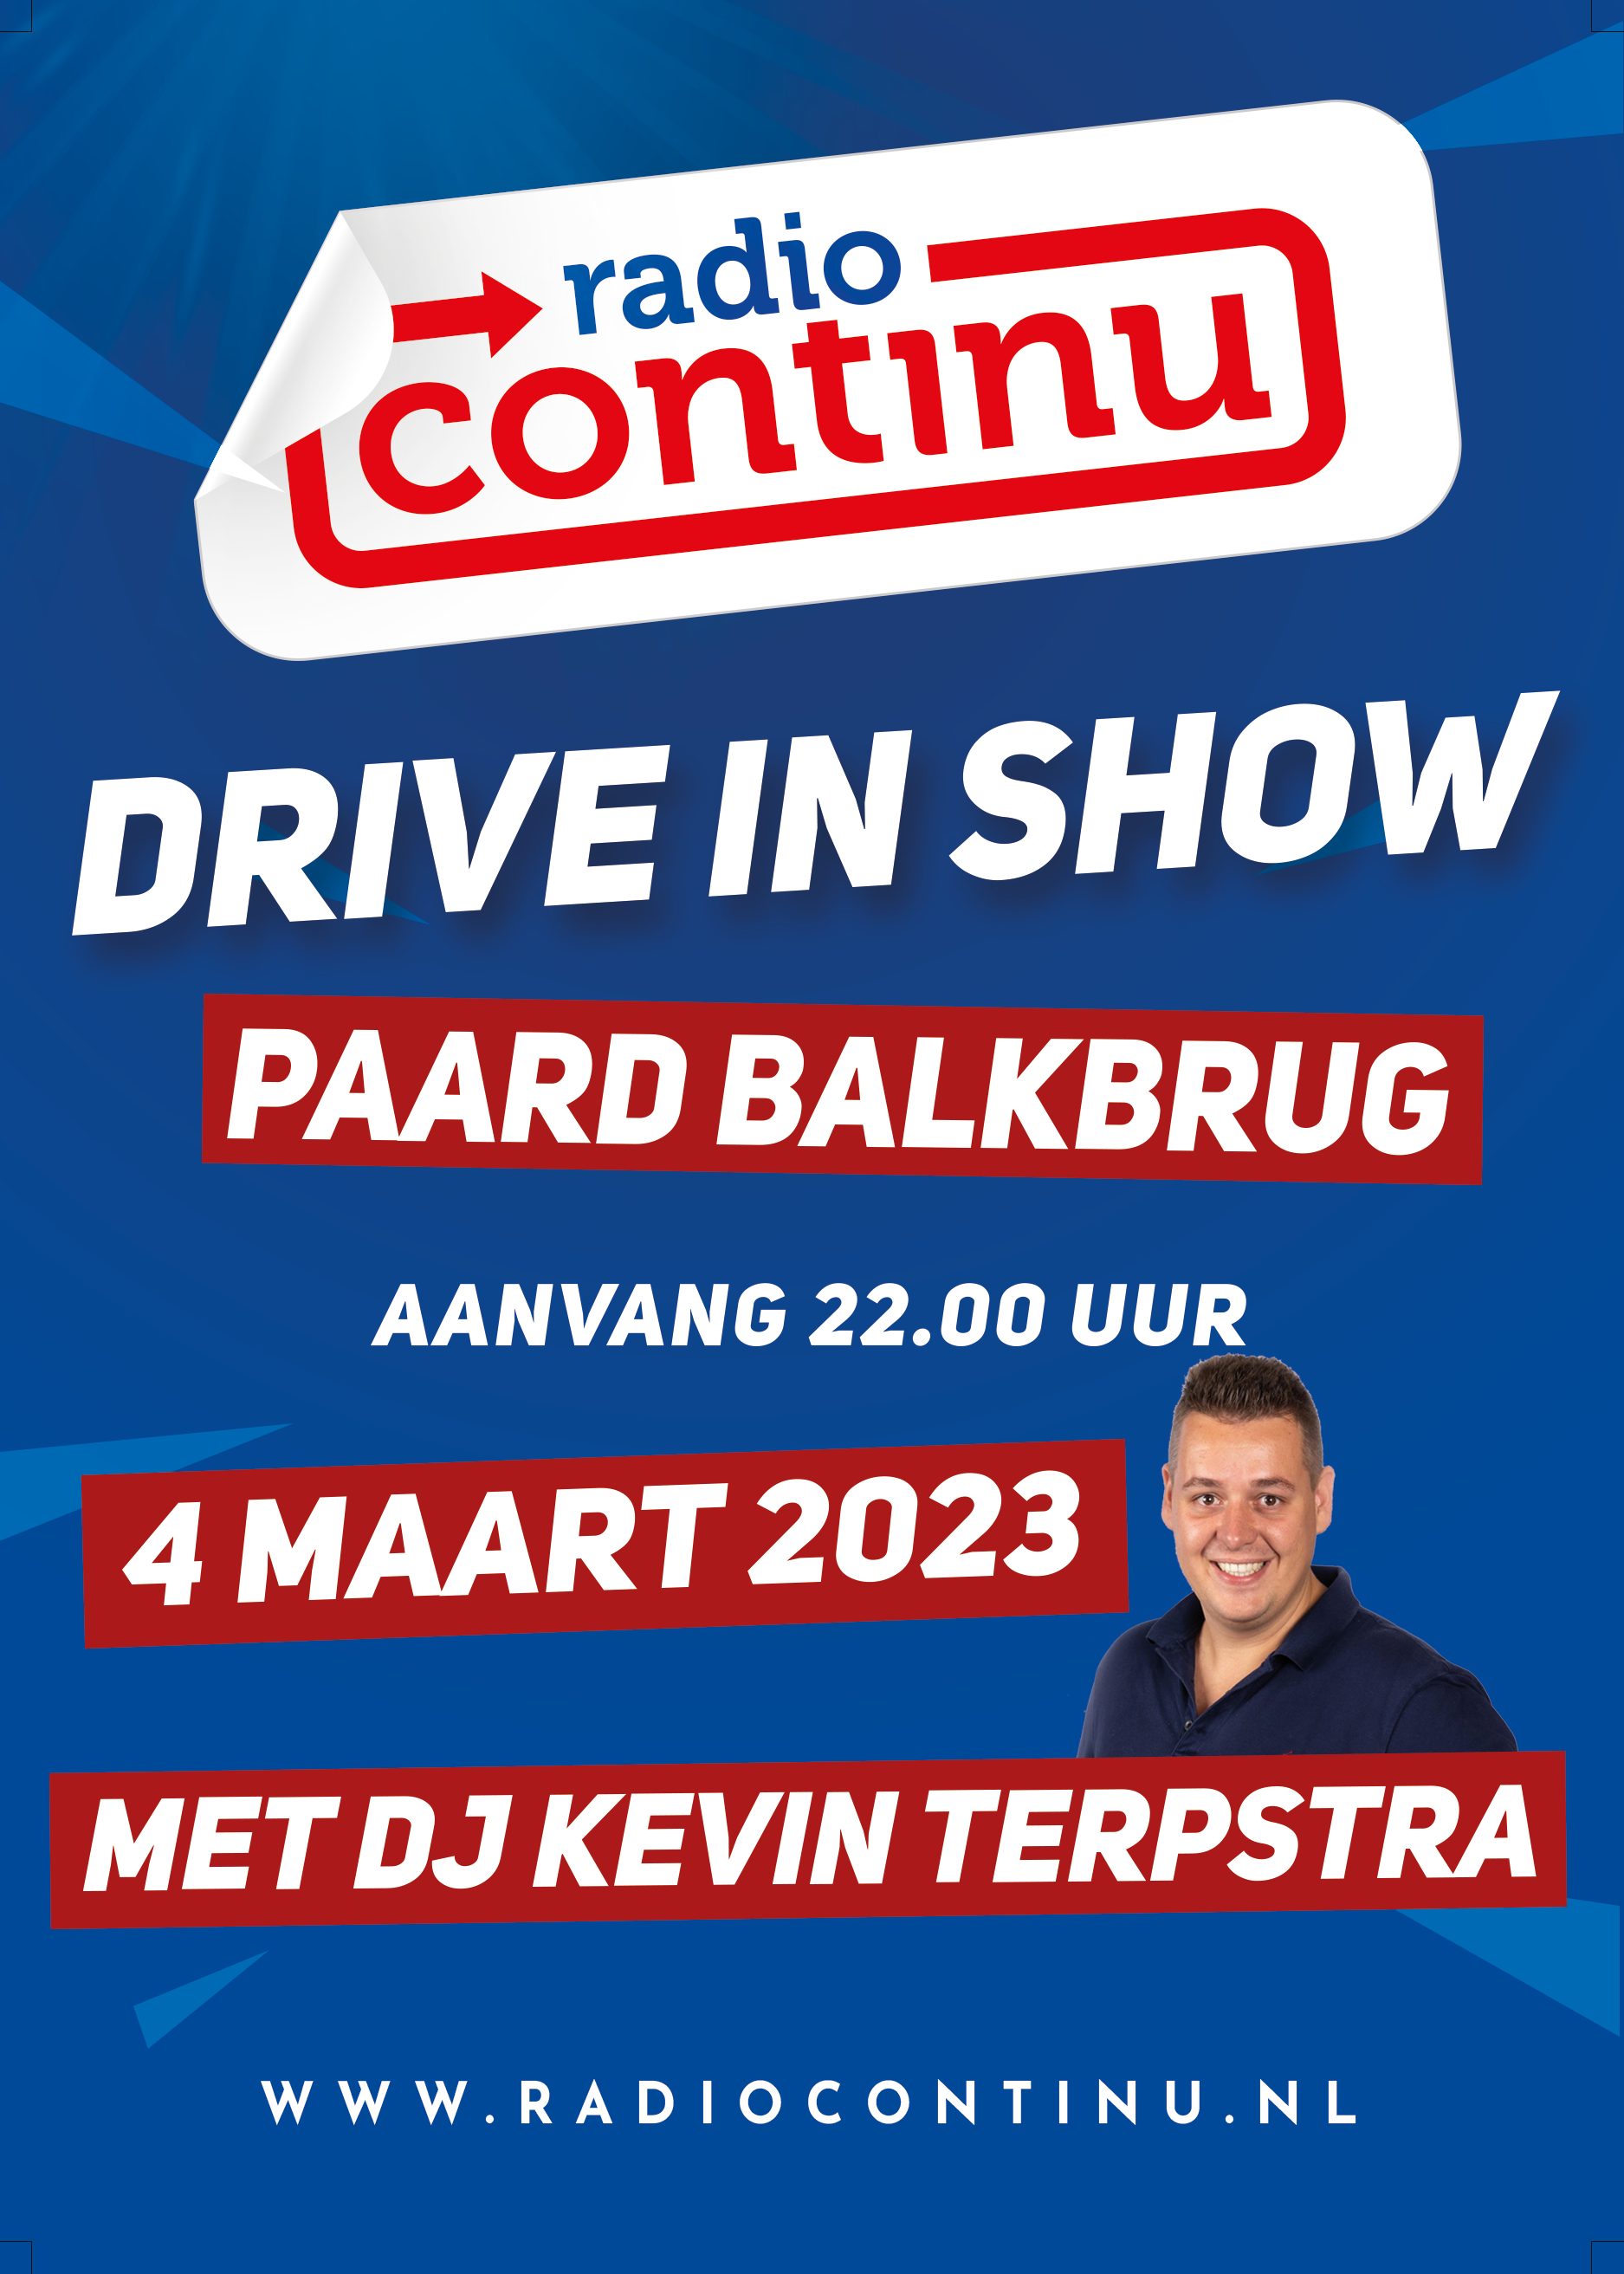 Radio Continu Drive-in Show Paard Balkbrug was zeer geslaagd!